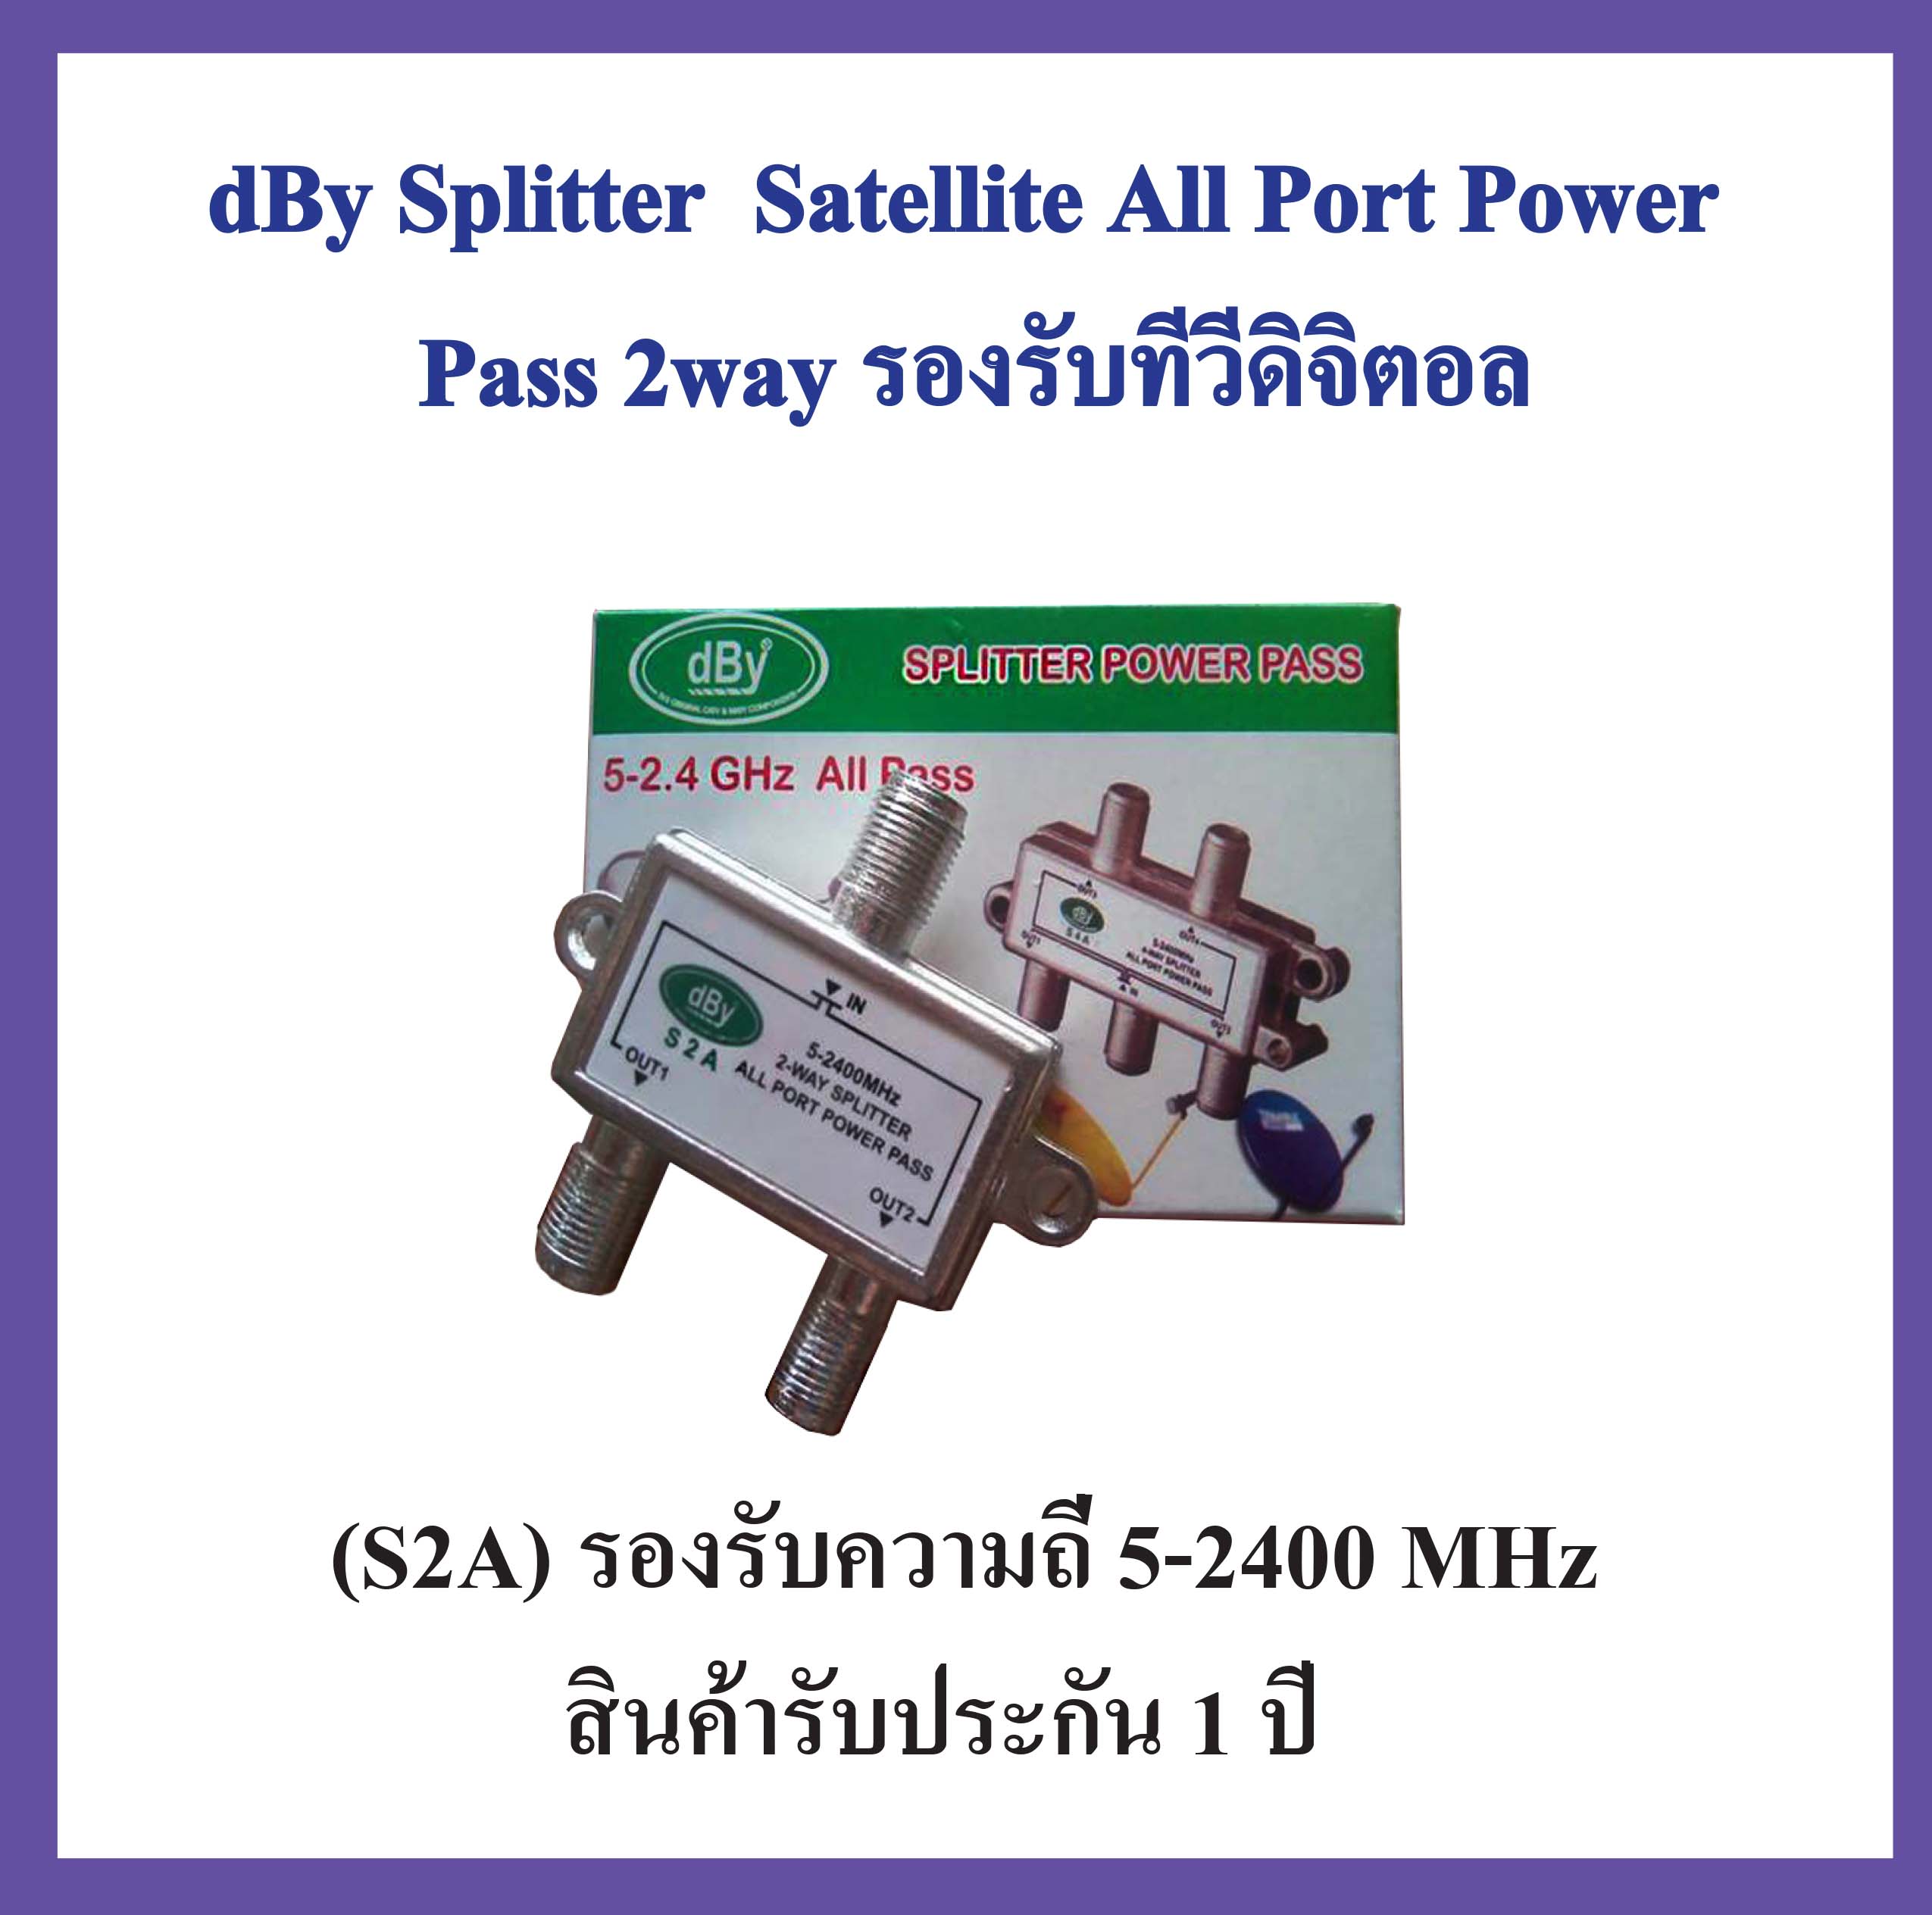 dBy Splitter Satellite All Port Power Pass 2 way รองรับทีวีดิจิตอล